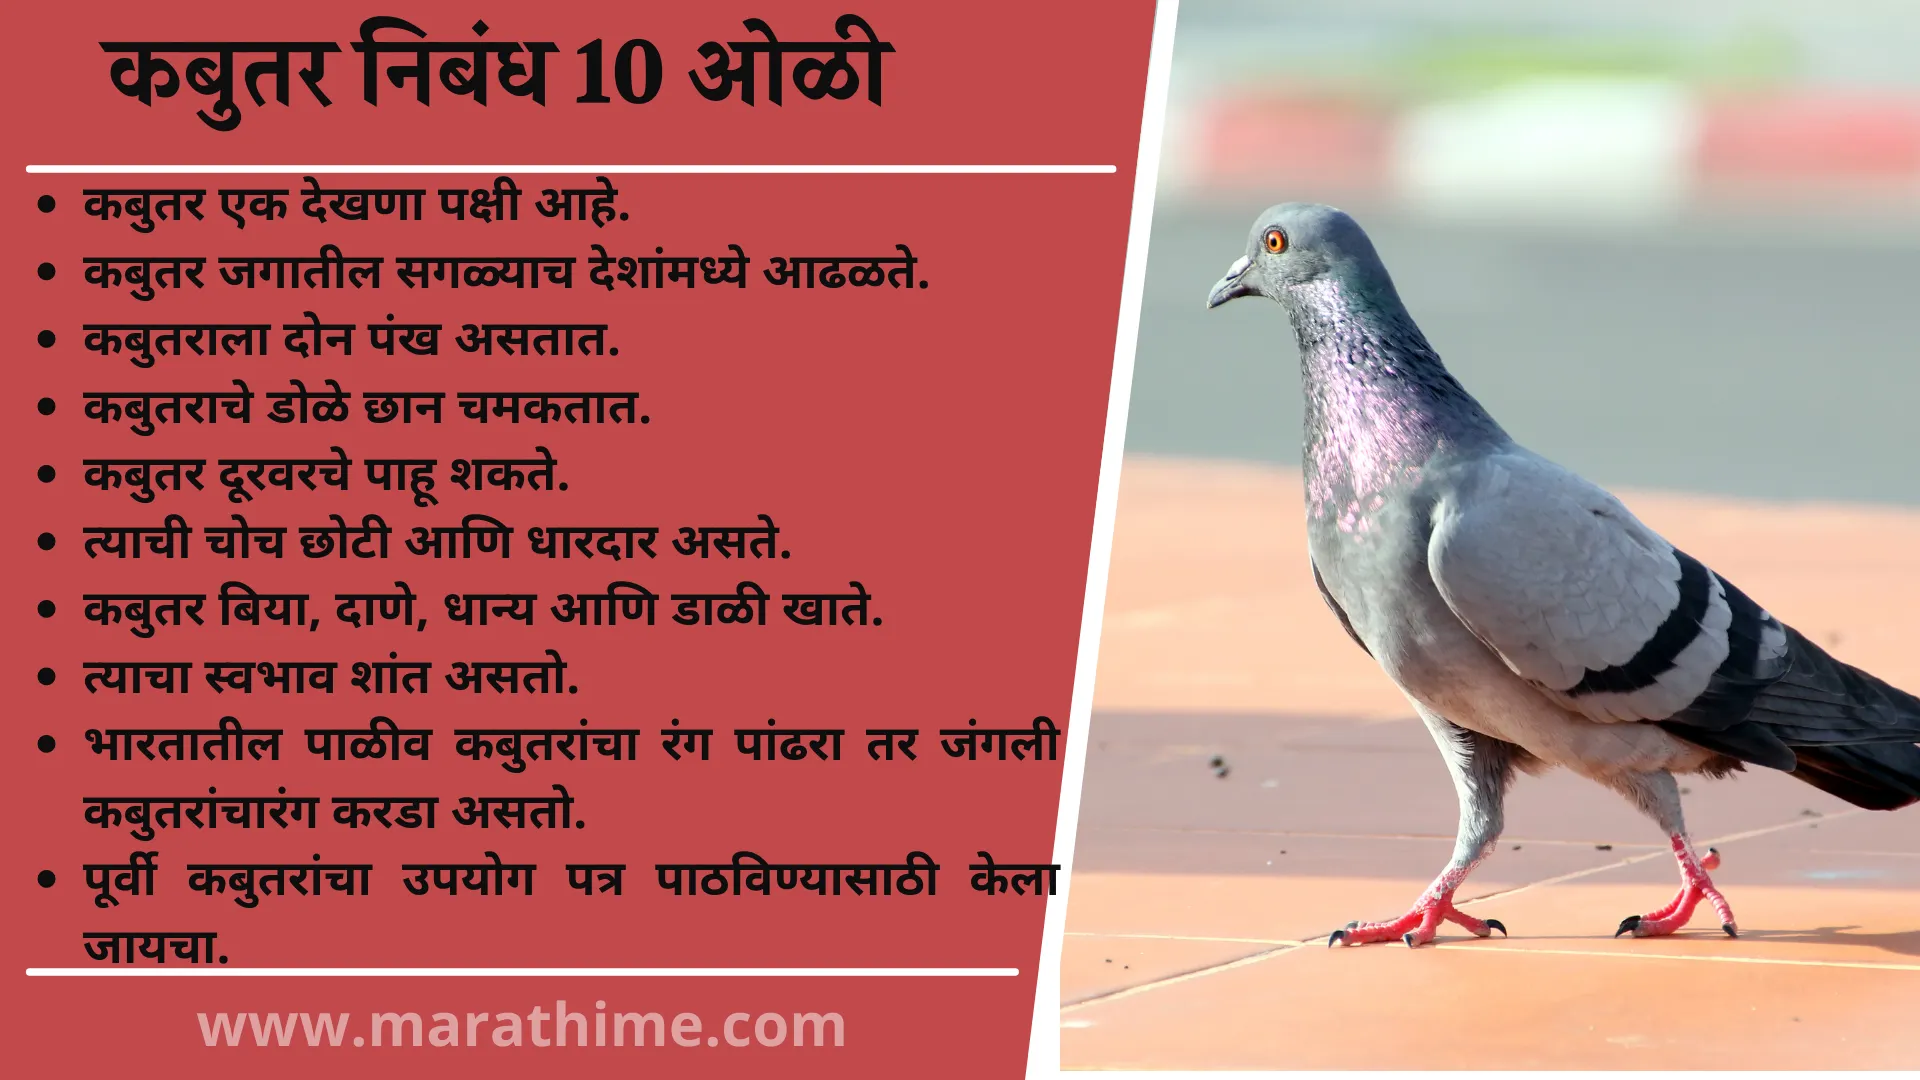 कबुतर निबंध 10 ओळी, 10 Lines On Pigeon in Marathi, Essay on Pigeon in Marathi